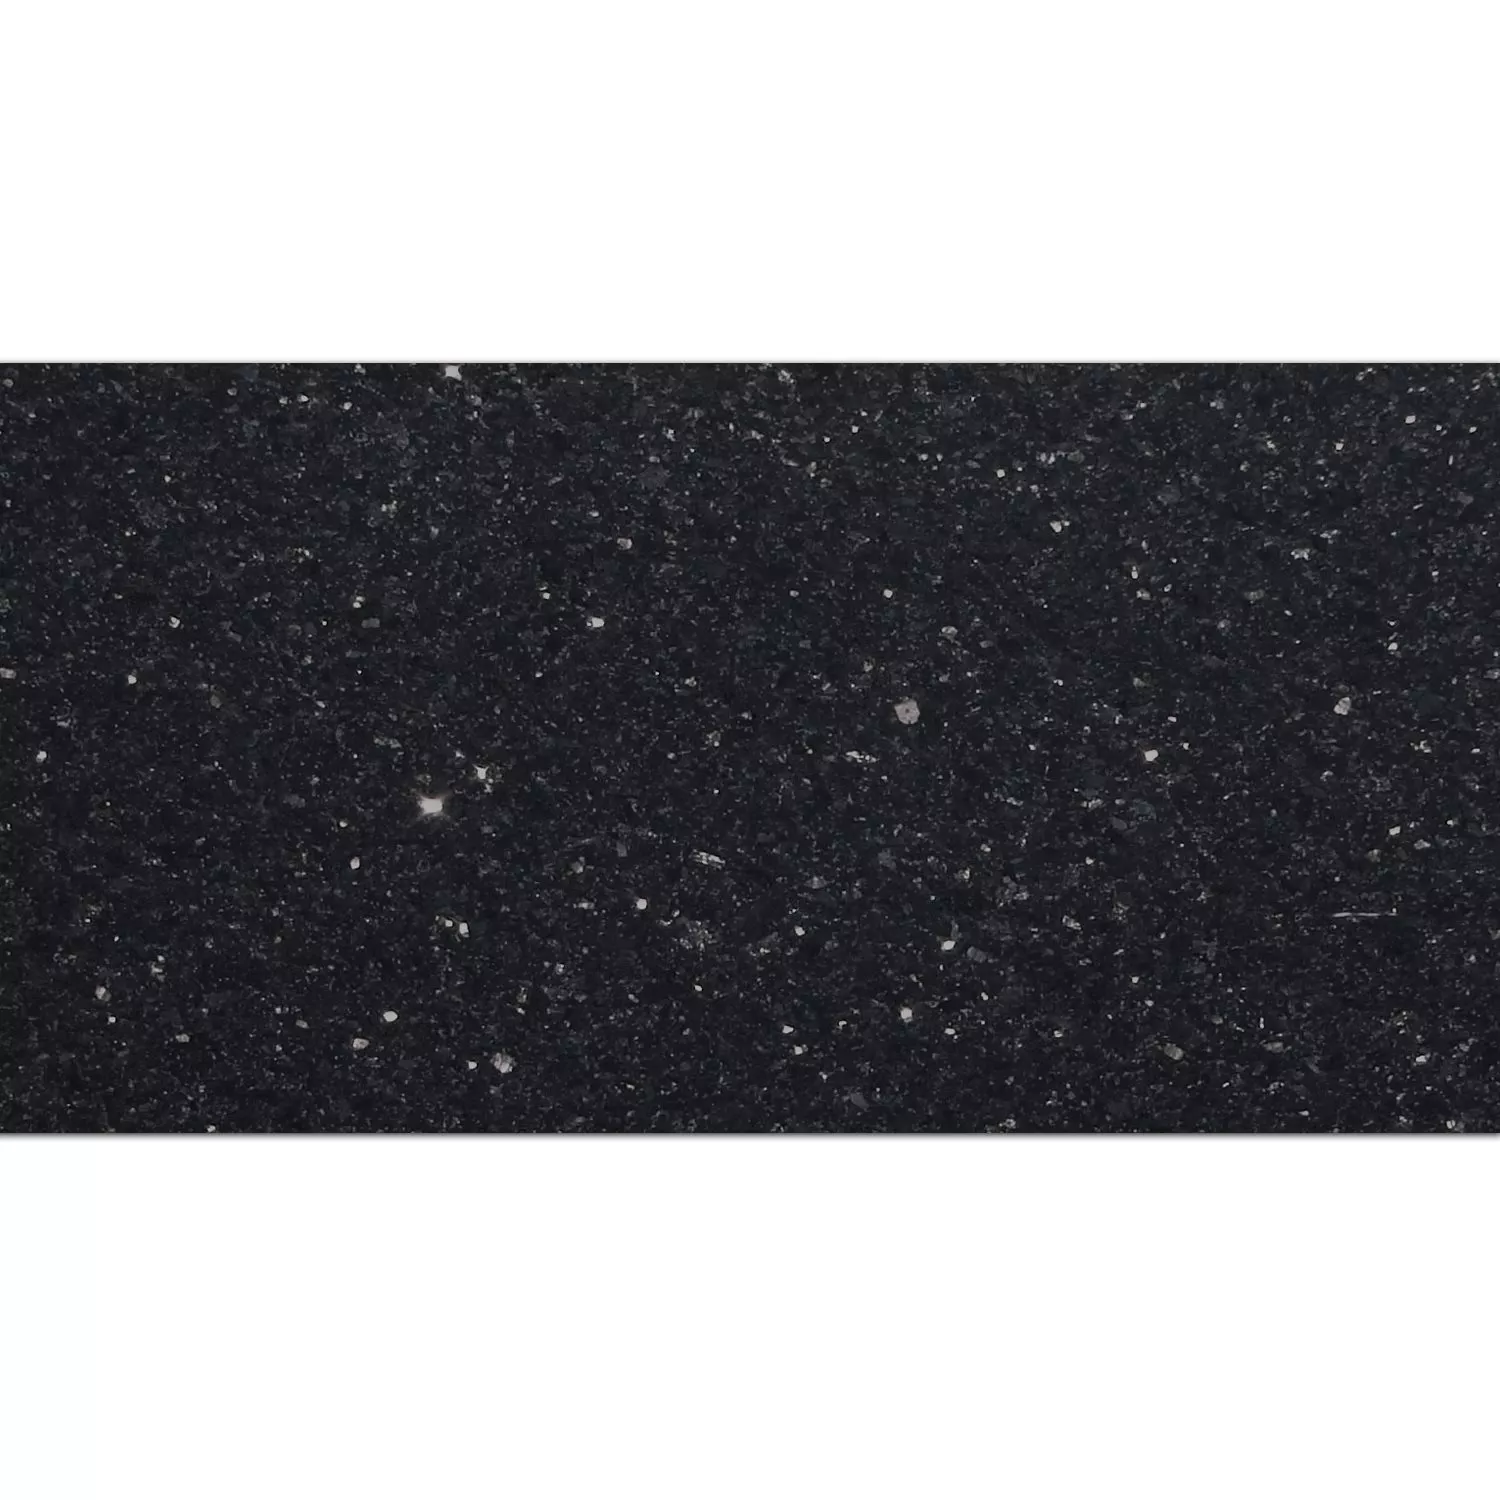 Carreaux Pierre Naturelle Granit Star Galaxy Poli Brillant 30,5x61cm